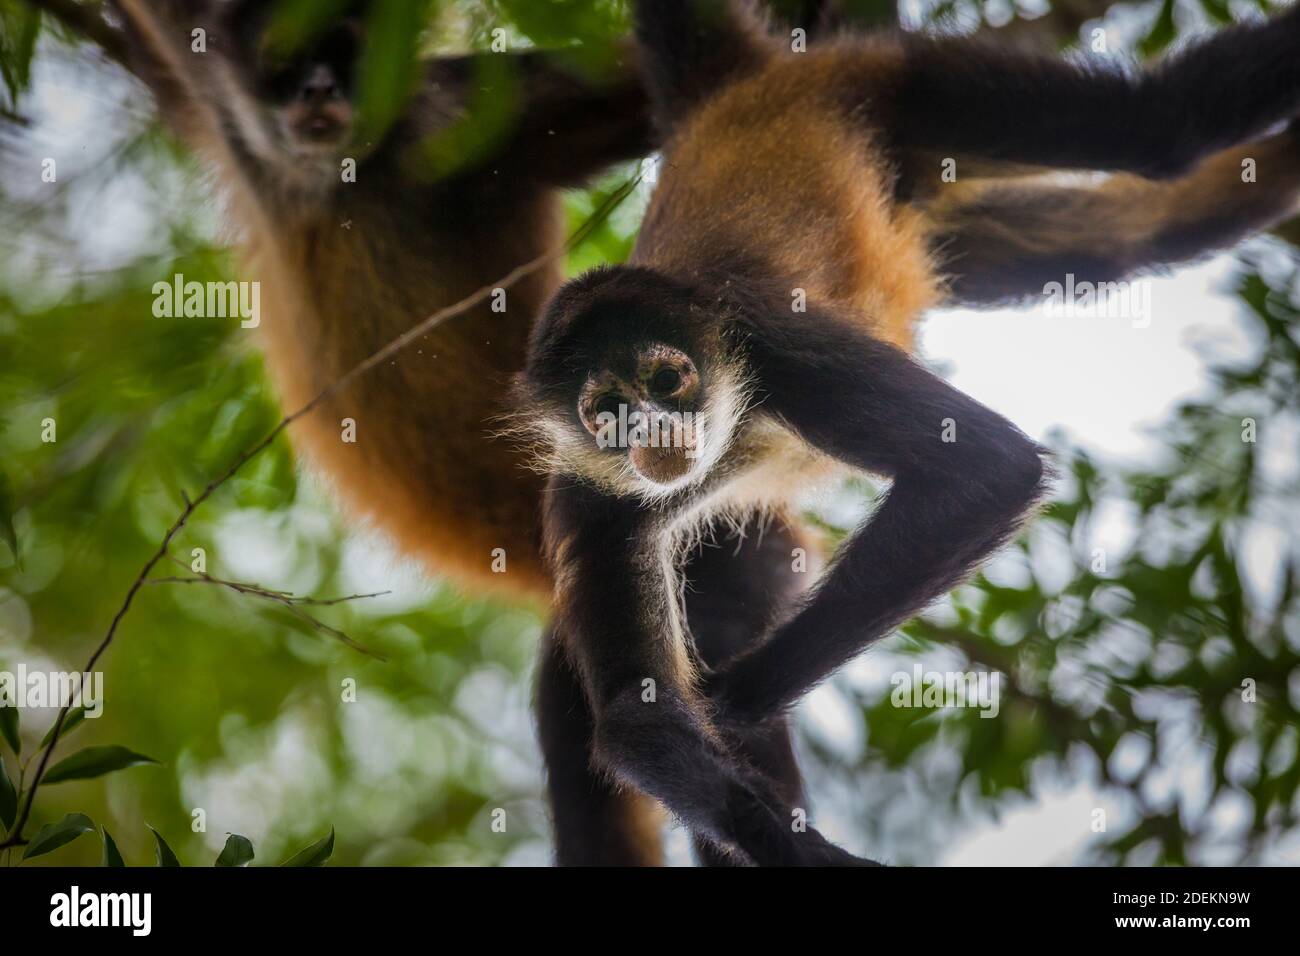 Azuero Spider Monkeys, Ateles geoffroyi azuerensis, inside the dense rainforest of Cerro Hoya national park, Veraguas province, Republic of Panama. Stock Photo